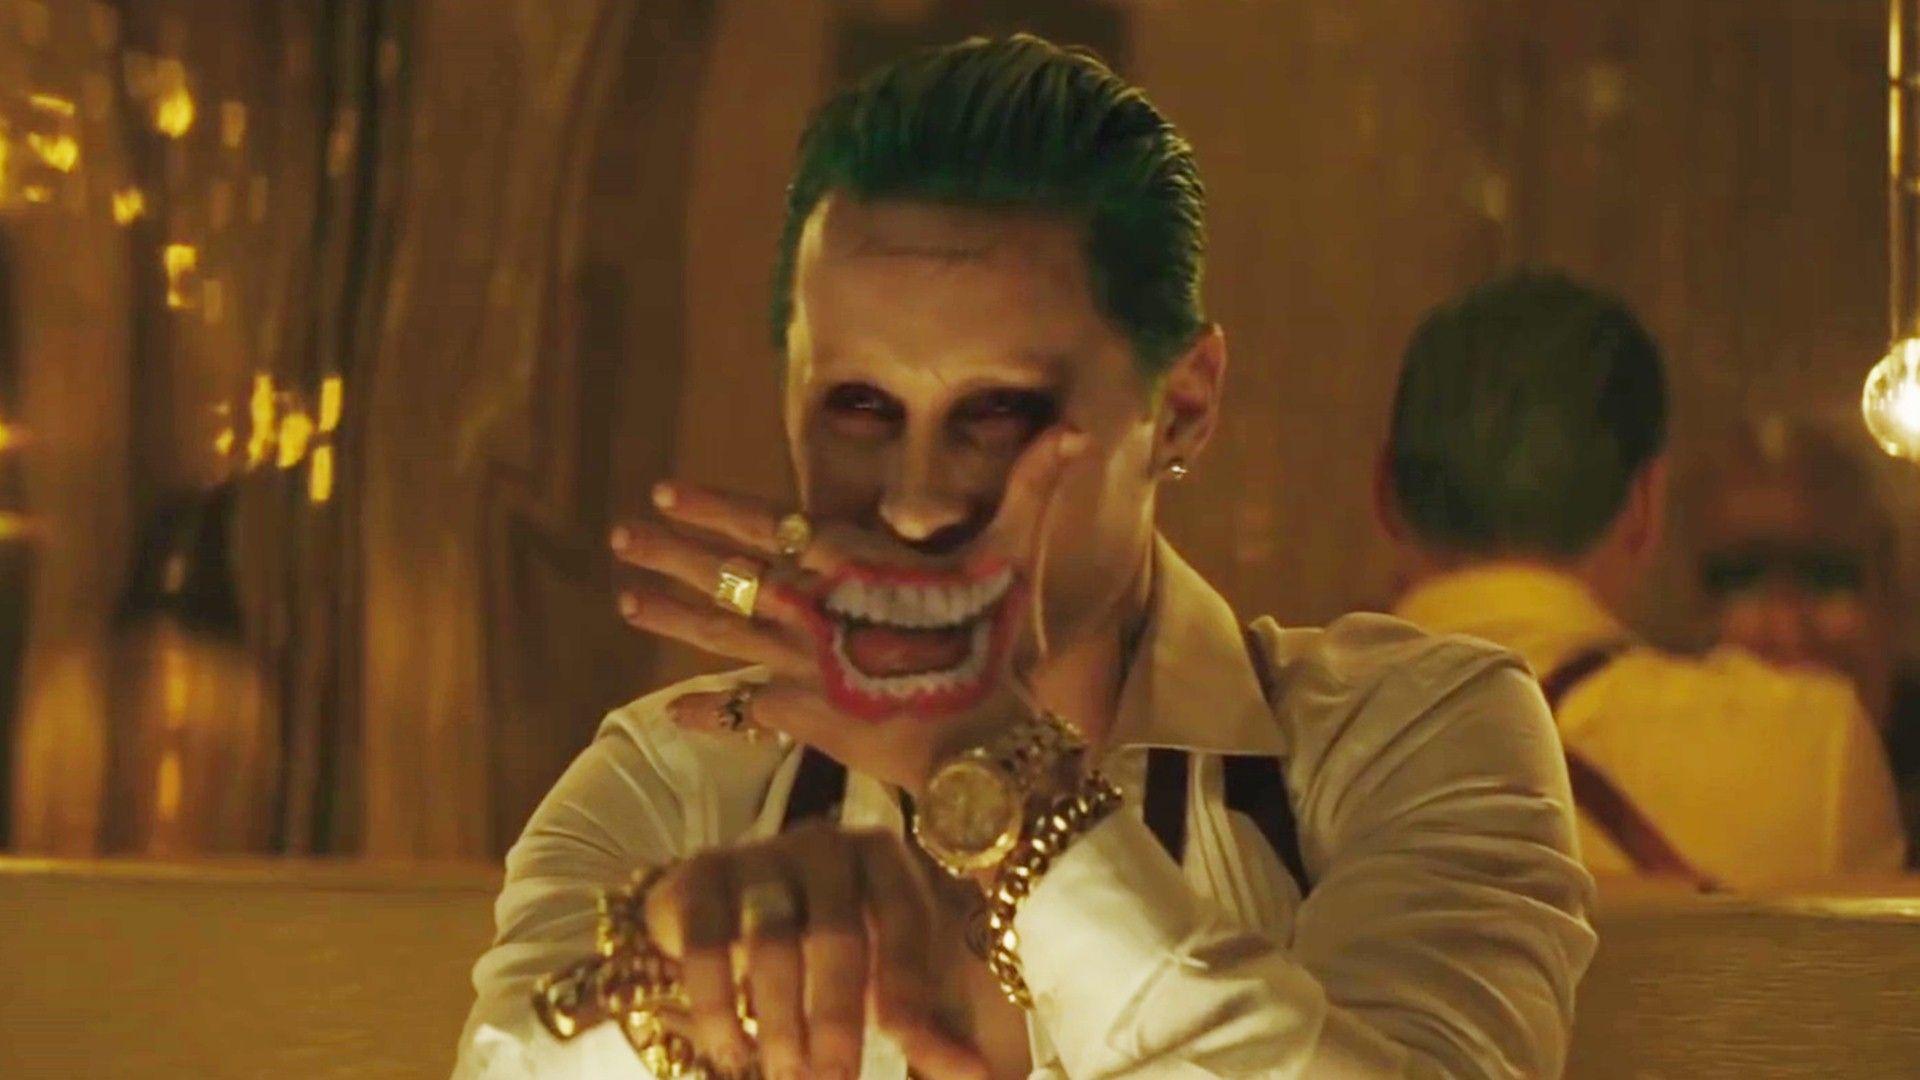 Joker Suicide Squad 4K Wallpapers - Top Free Joker Suicide Squad 4K ...